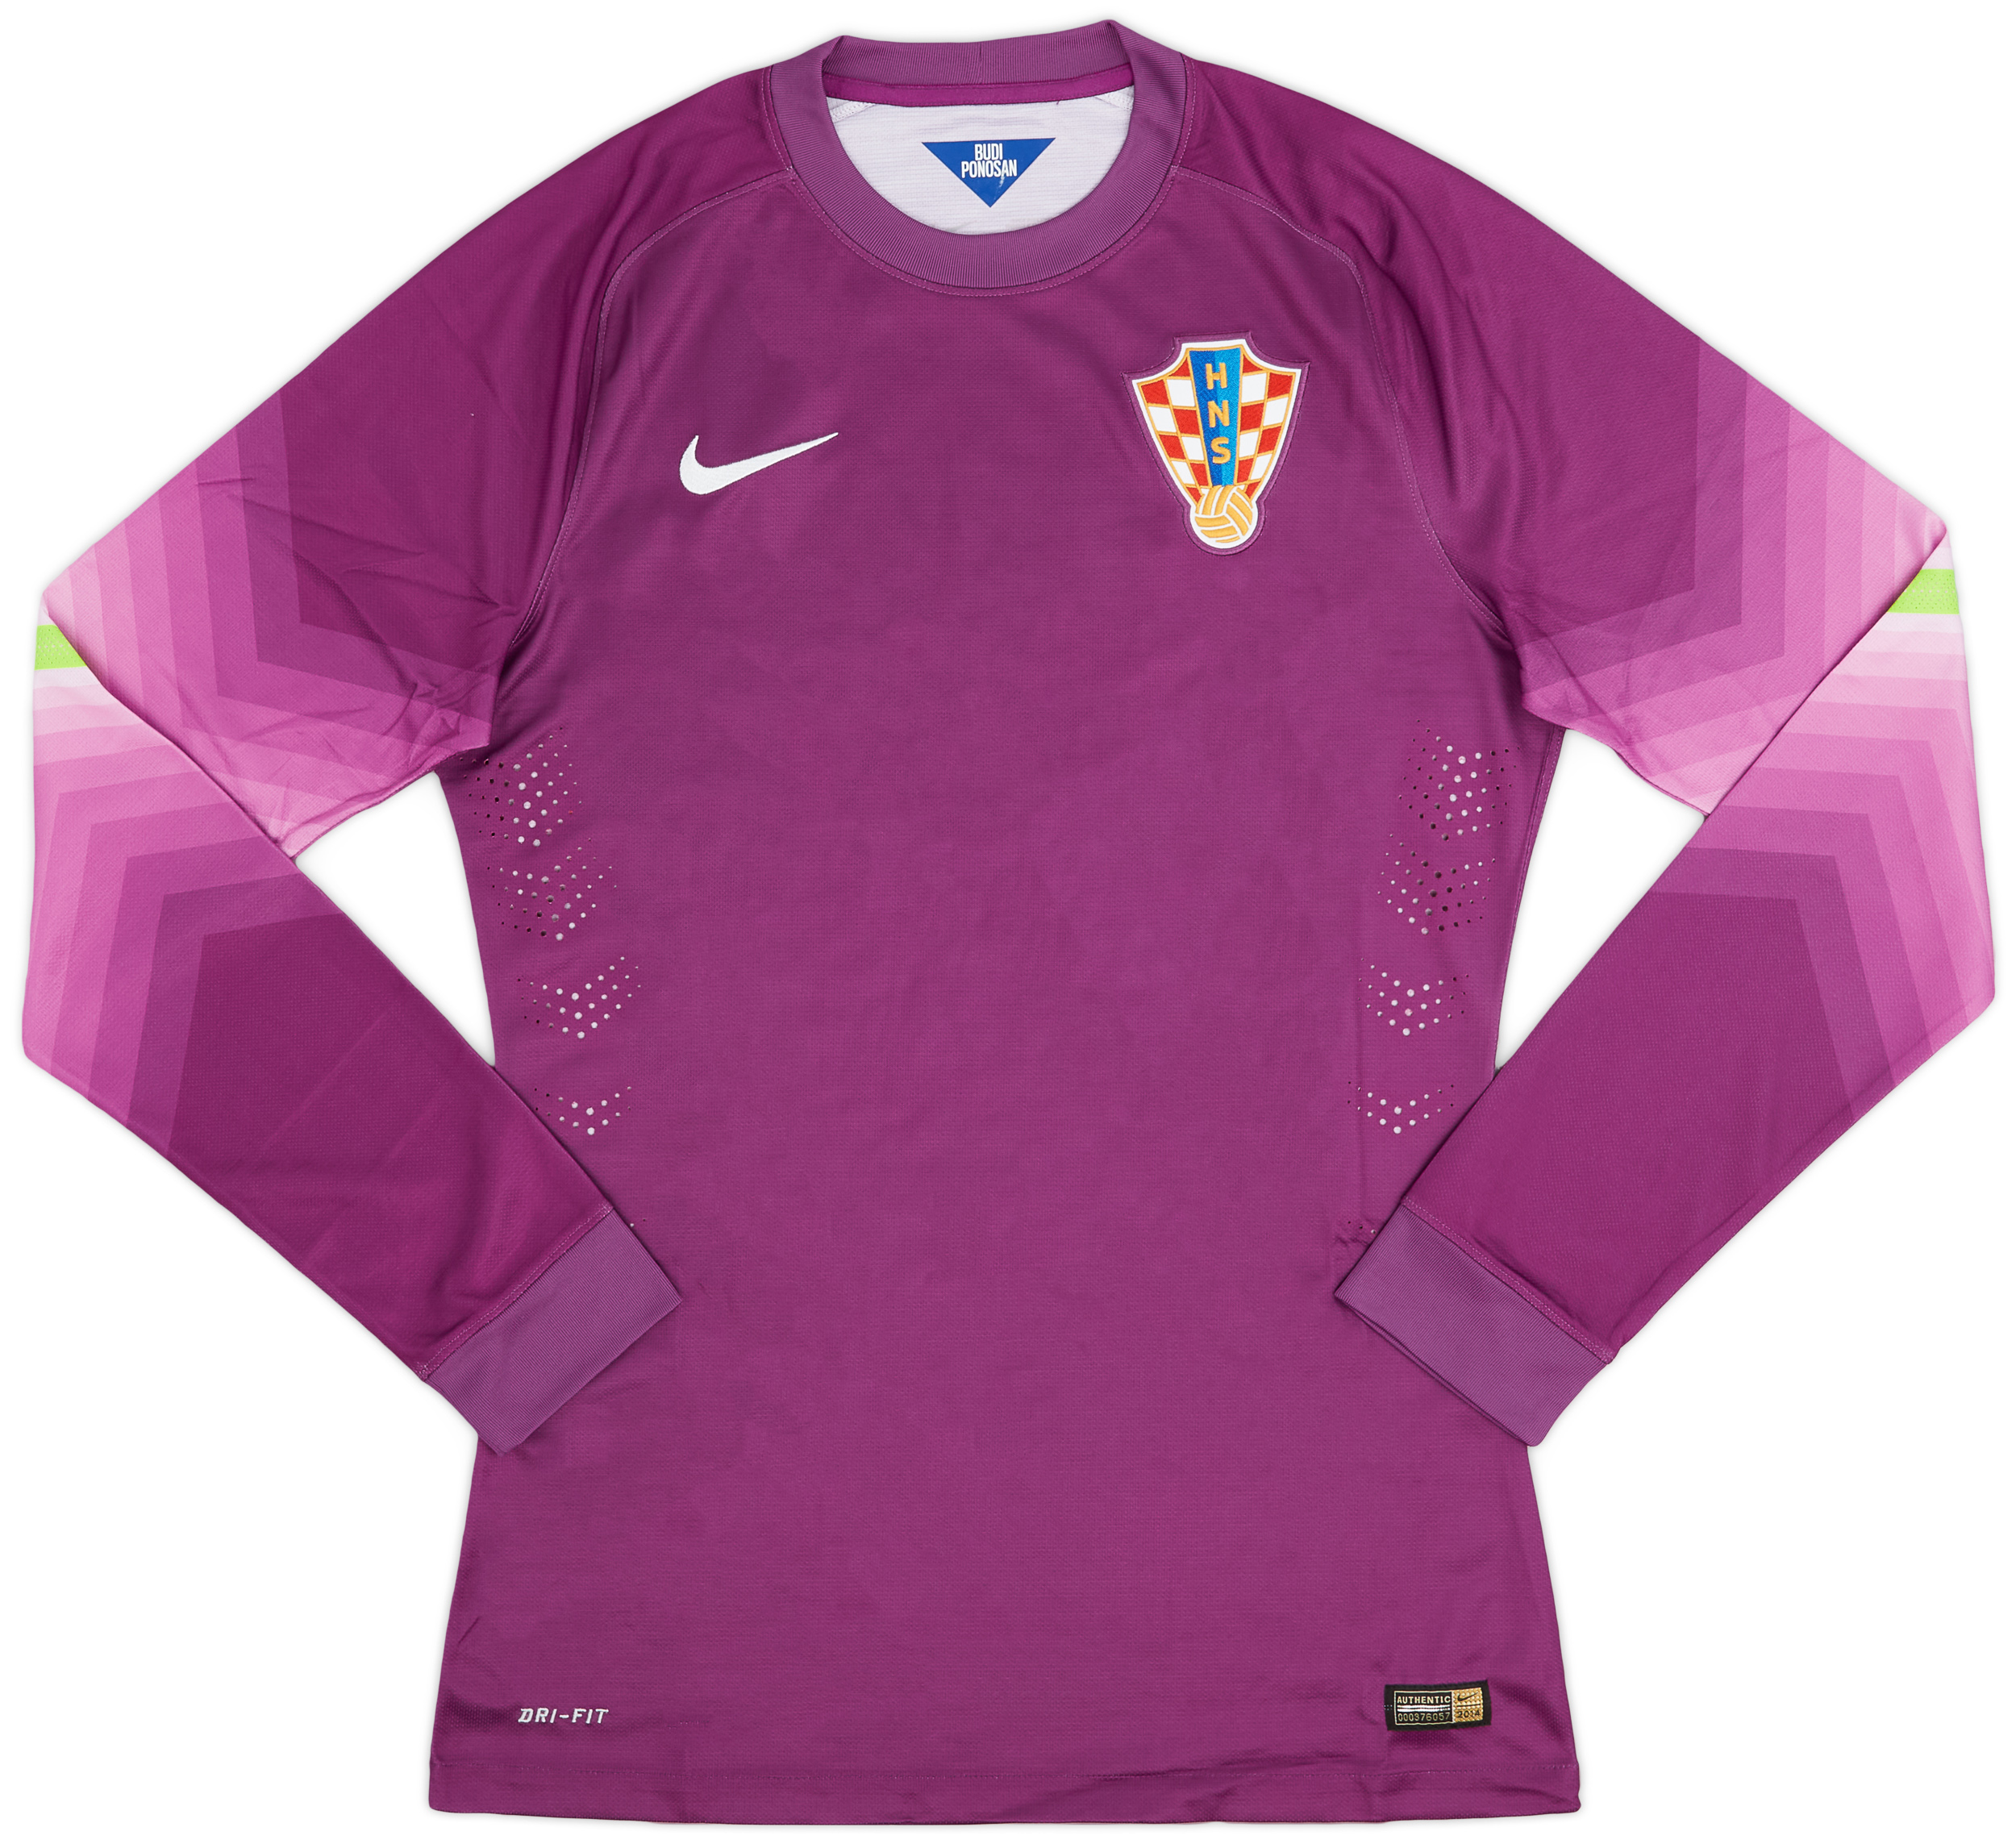 2014-15 Croatia Player Issue GK Shirt - 9/10 - ()